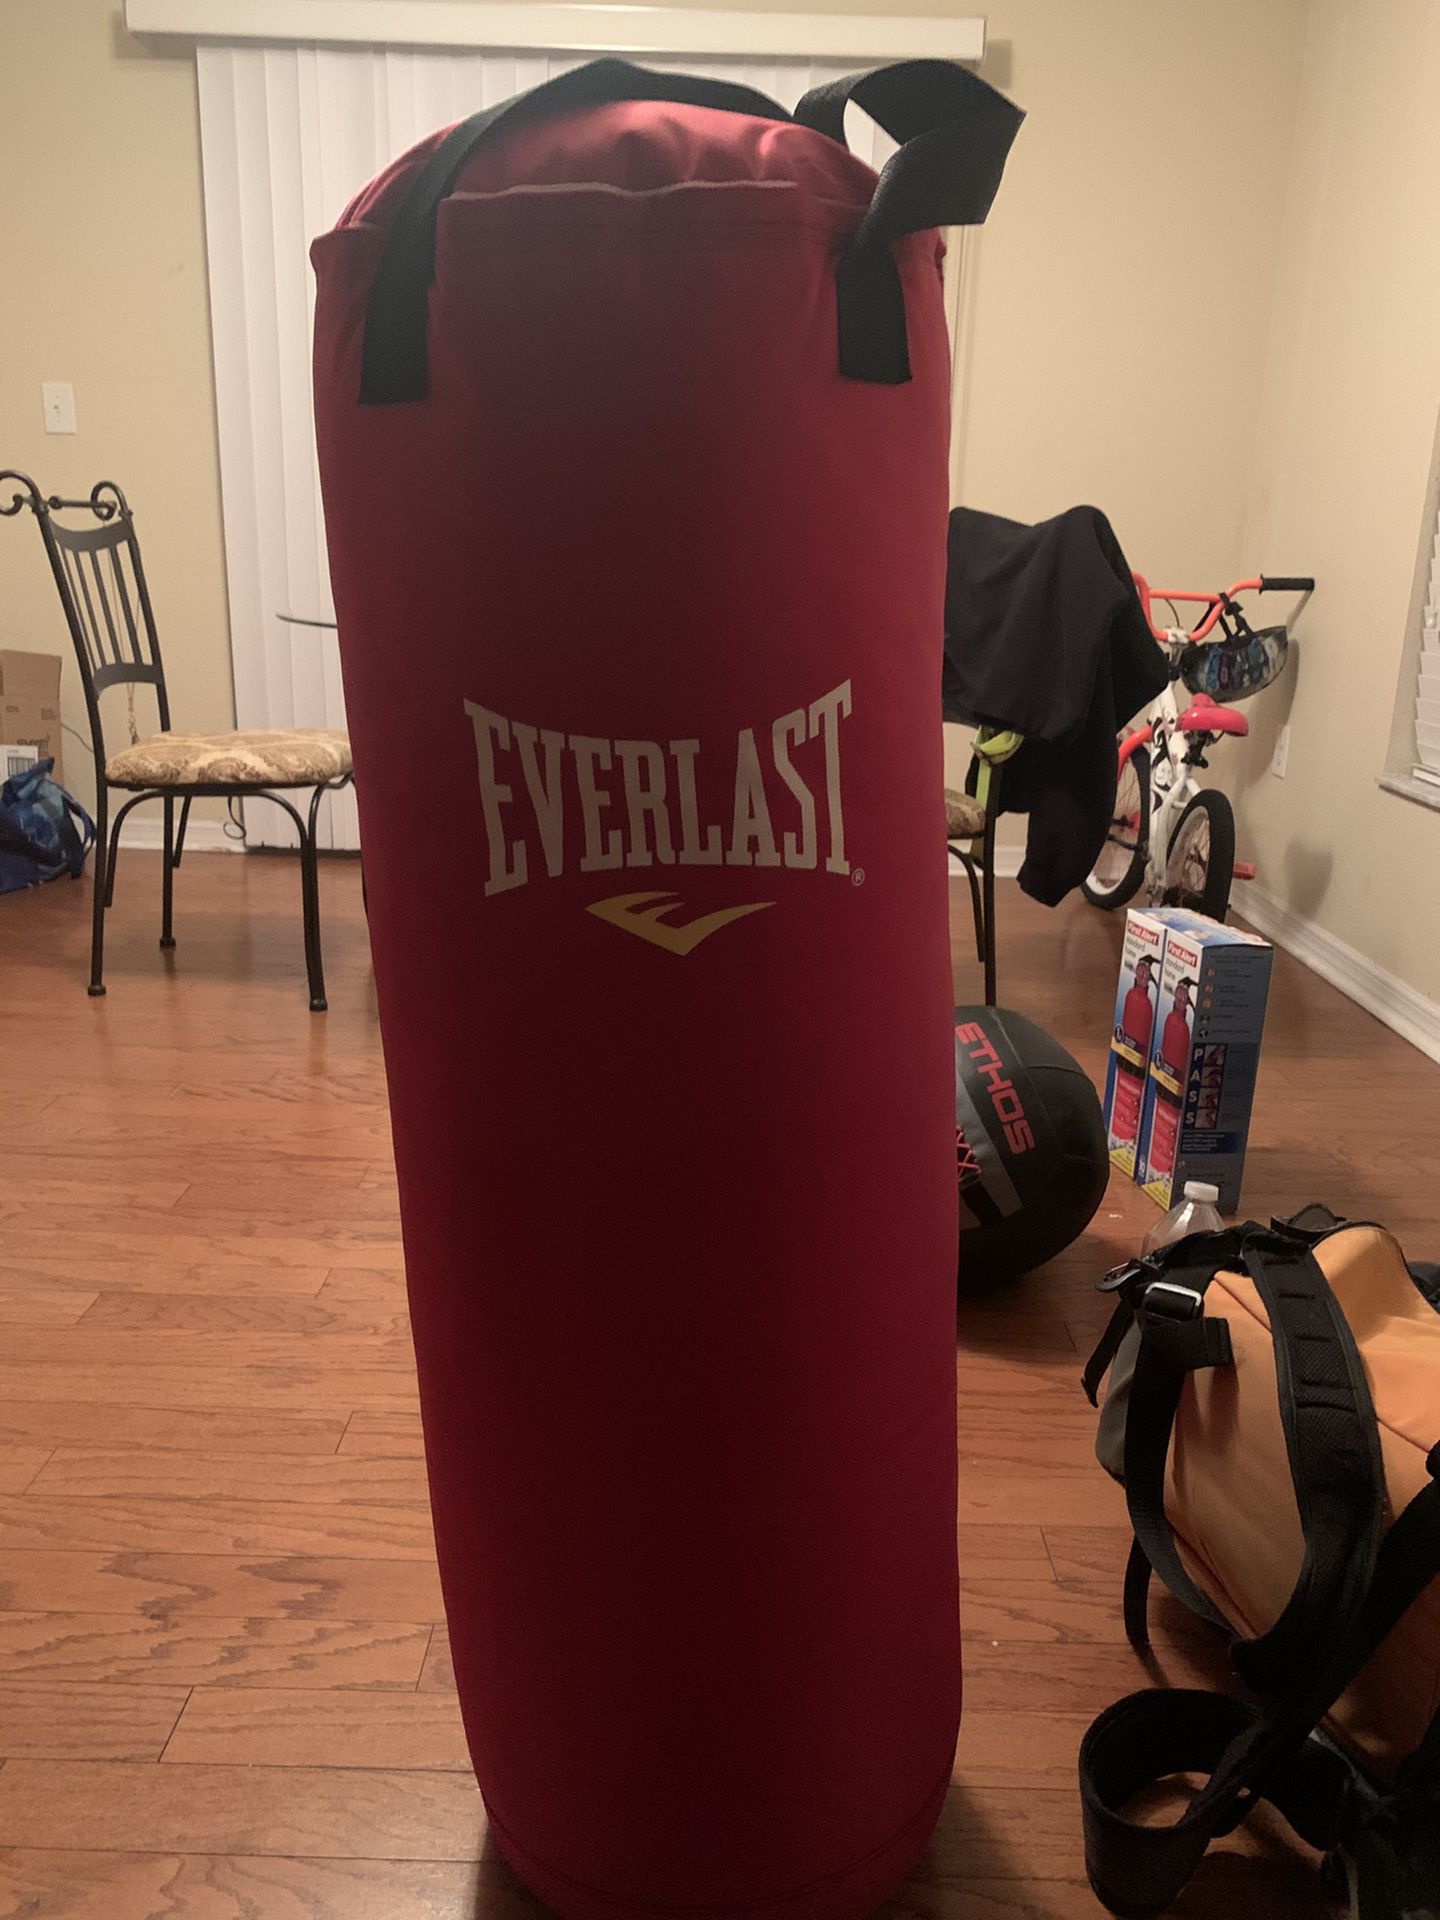 50lb Everlast punching bag